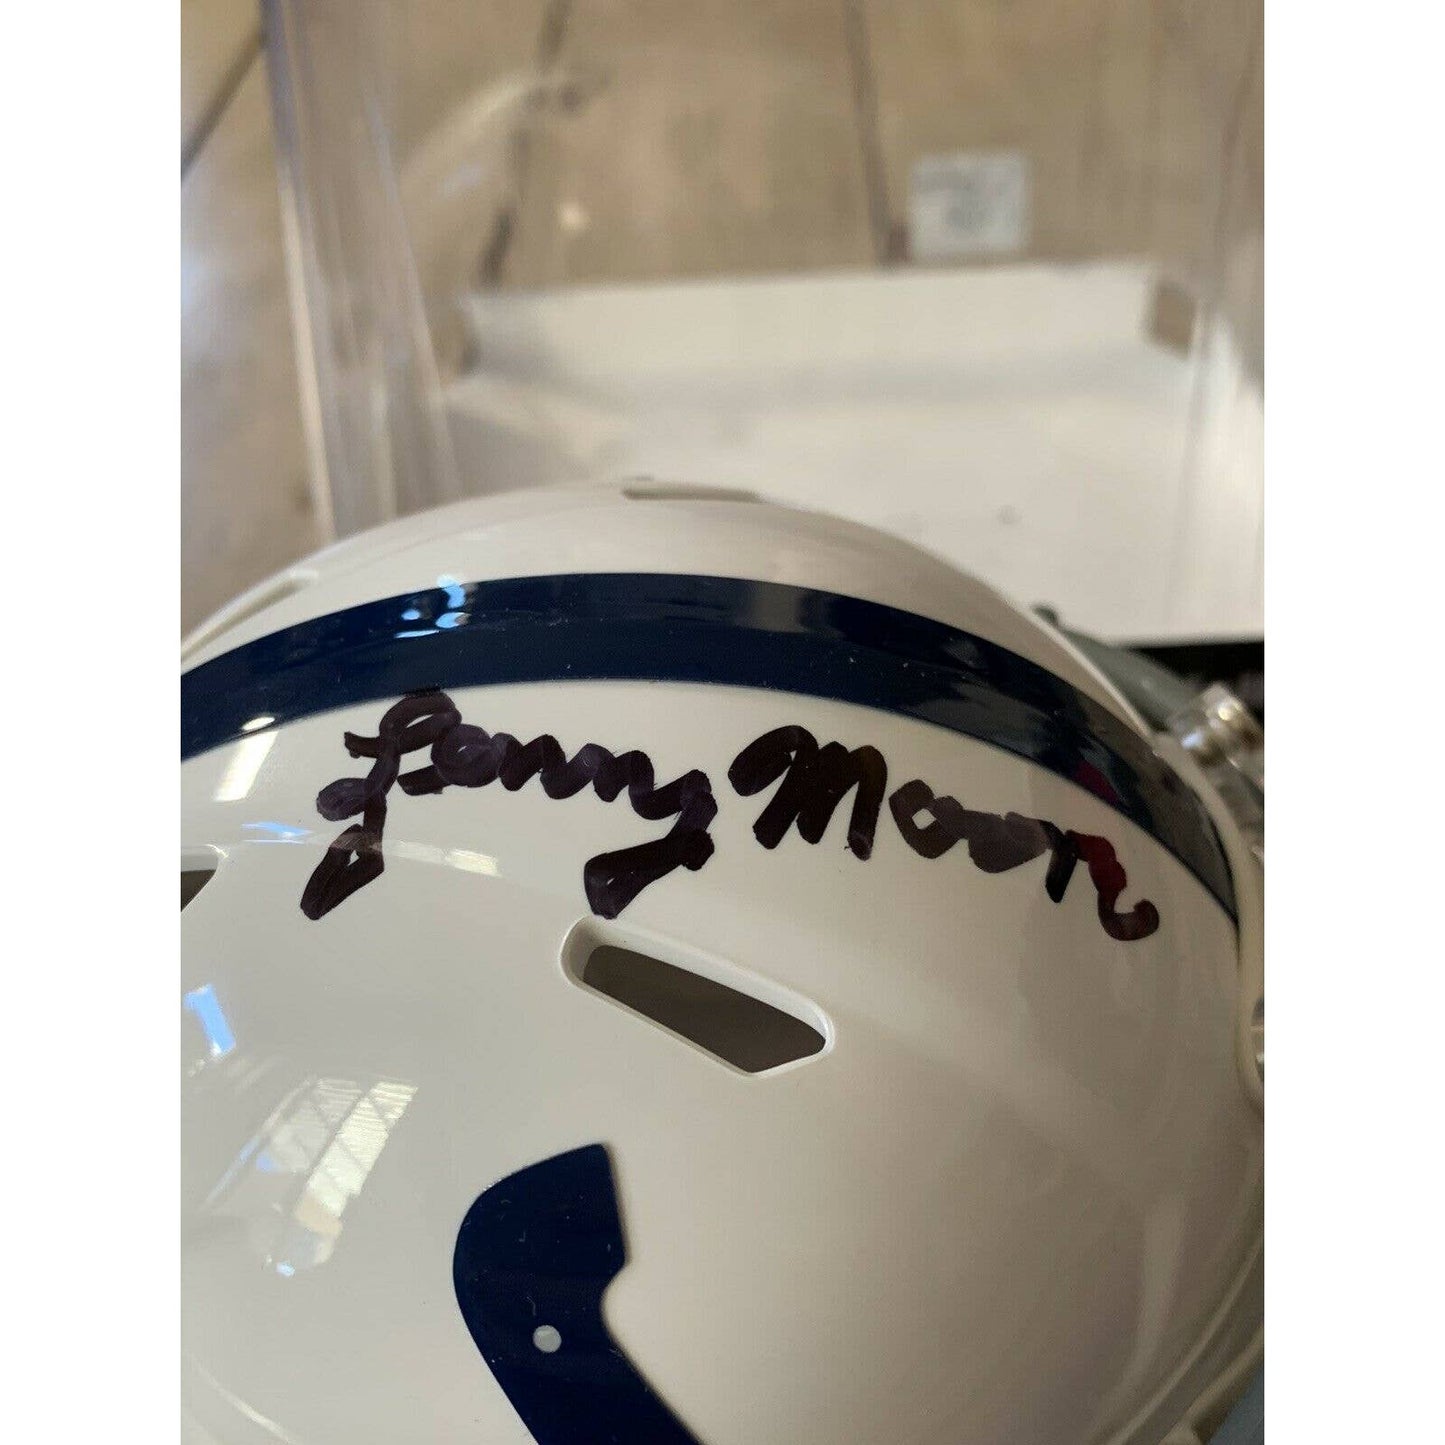 Lenny Moore Autographed/Signed Mini Helmet Beckett COA Indianapolis Colts A - TreasuresEvolved